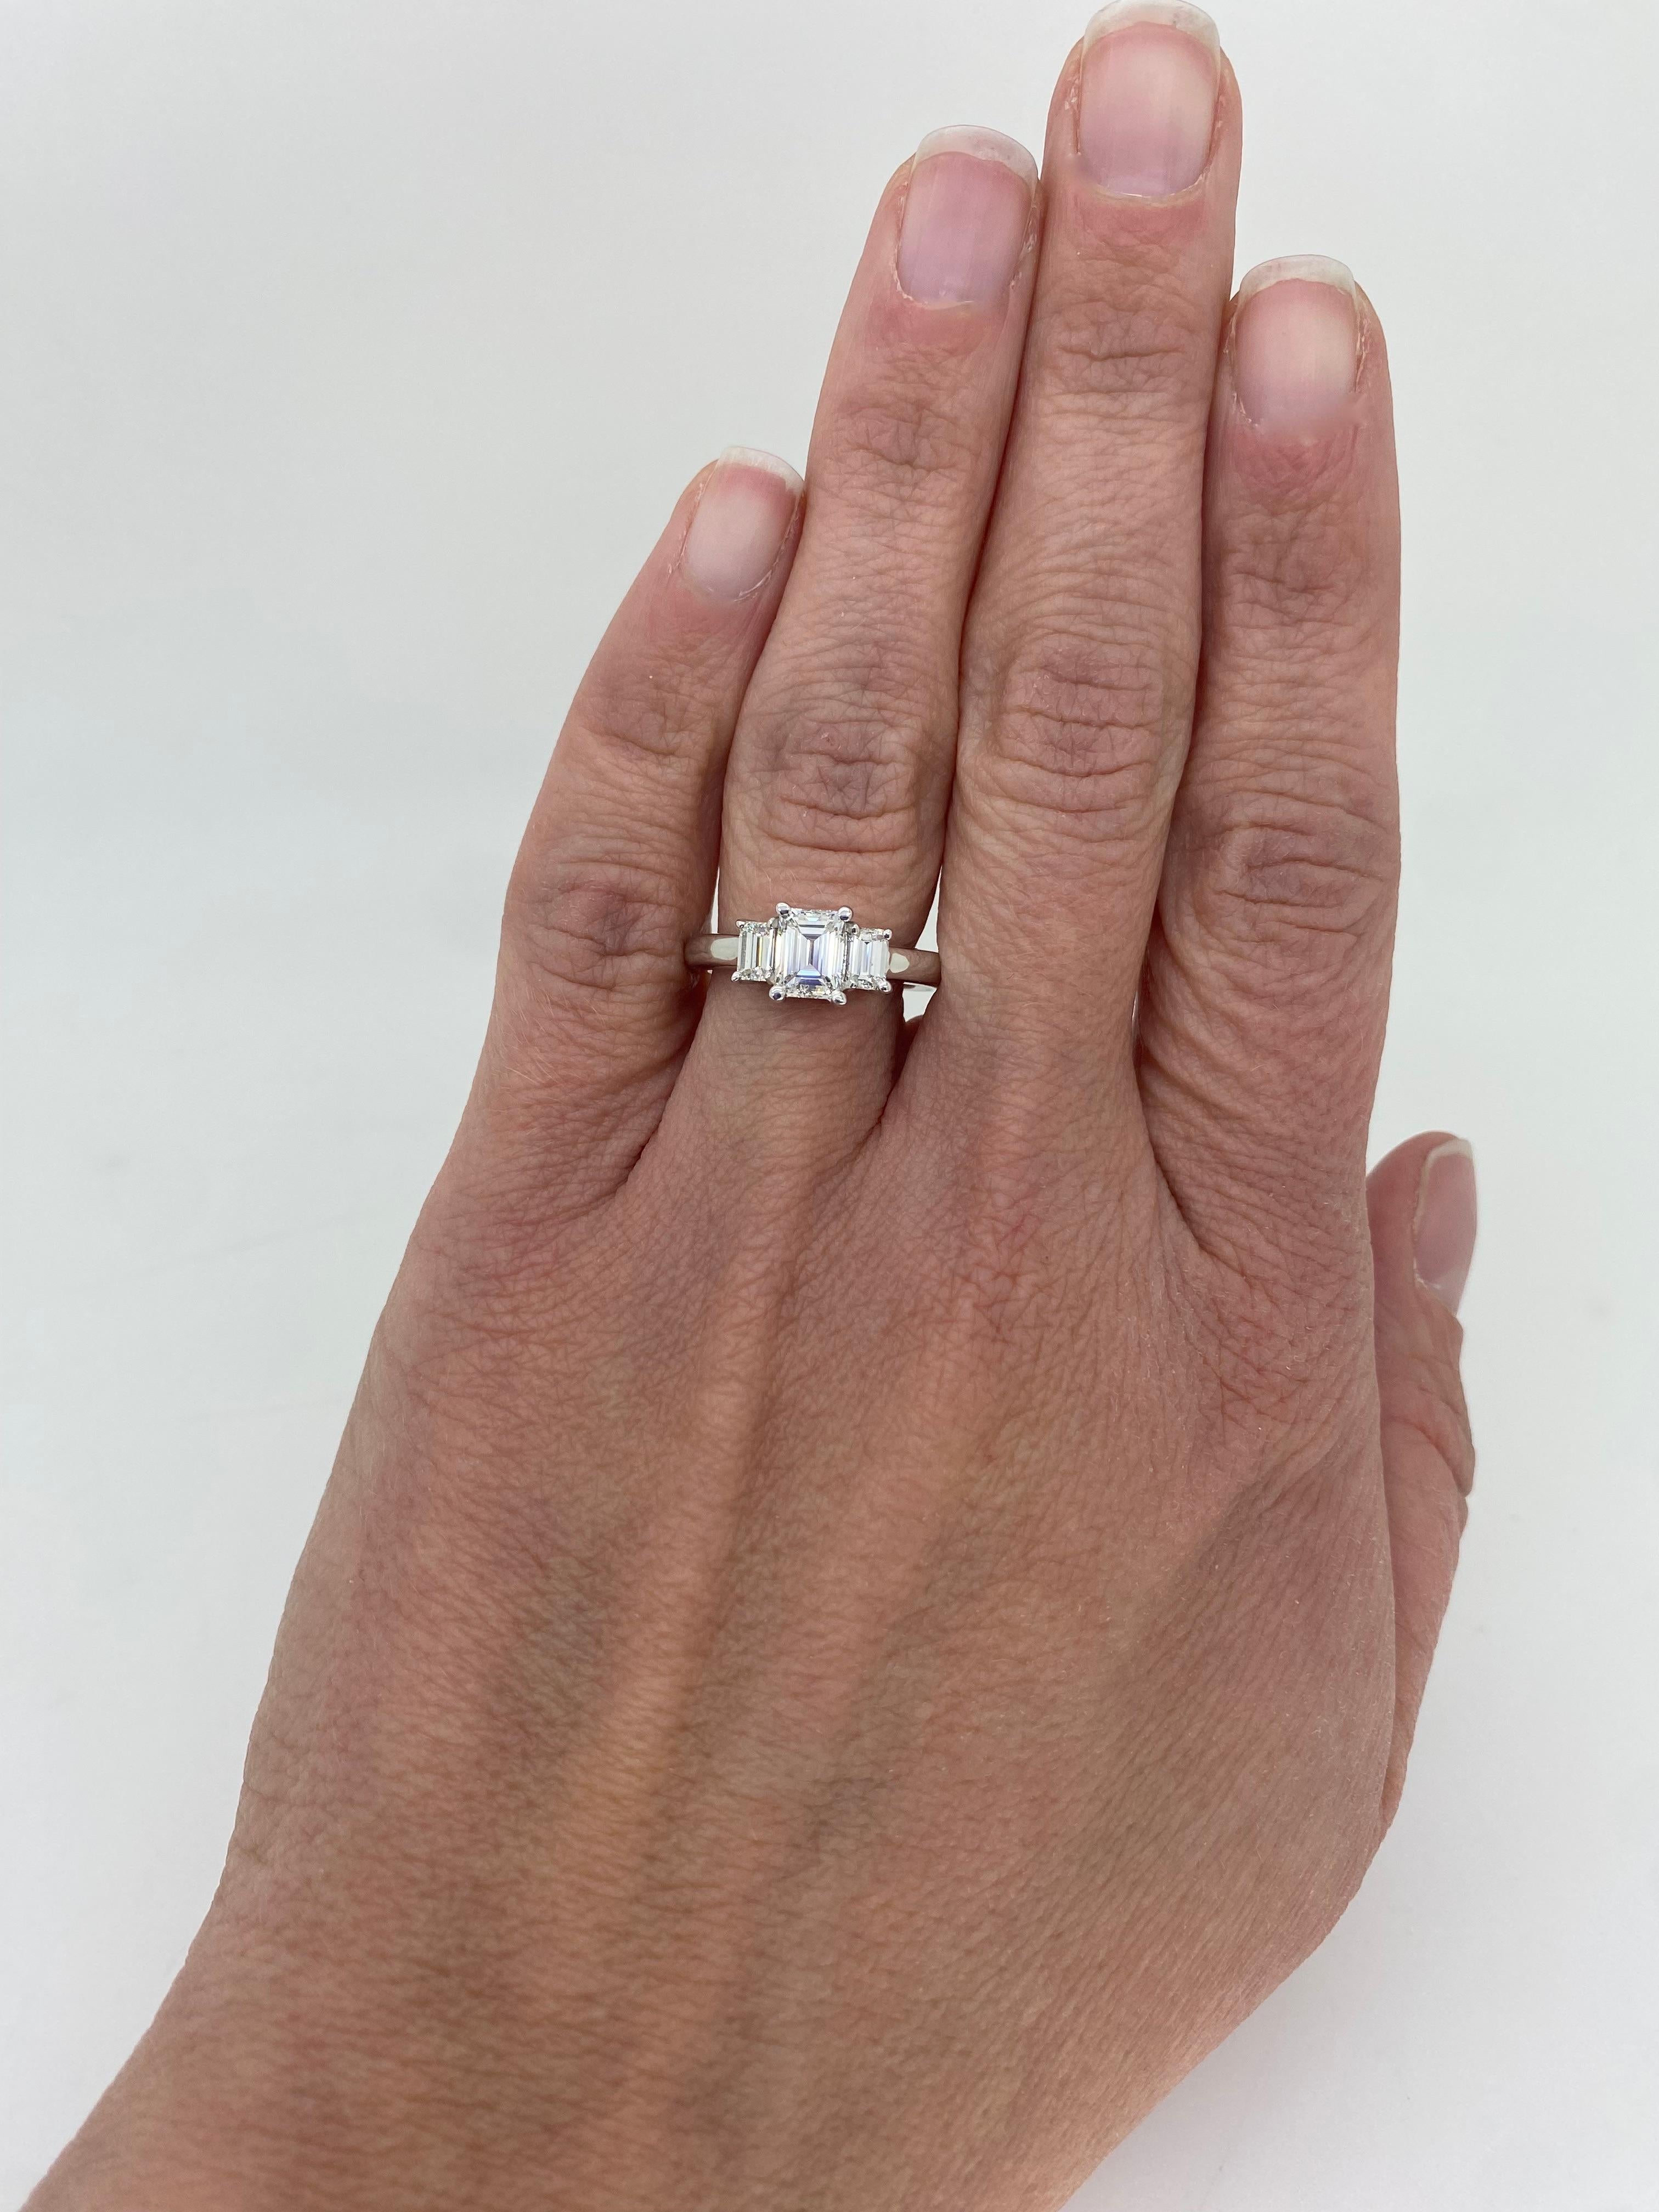 Stunning three stone Emerald cut diamond engagement ring made in 14k white gold, and certified by IGI. 

IGI Certification # 30020164G
Center Diamond Carat Weight: 1.00CT
Center Diamond Cut: Emerald Cut
Center Diamond Color: H
Center Diamond